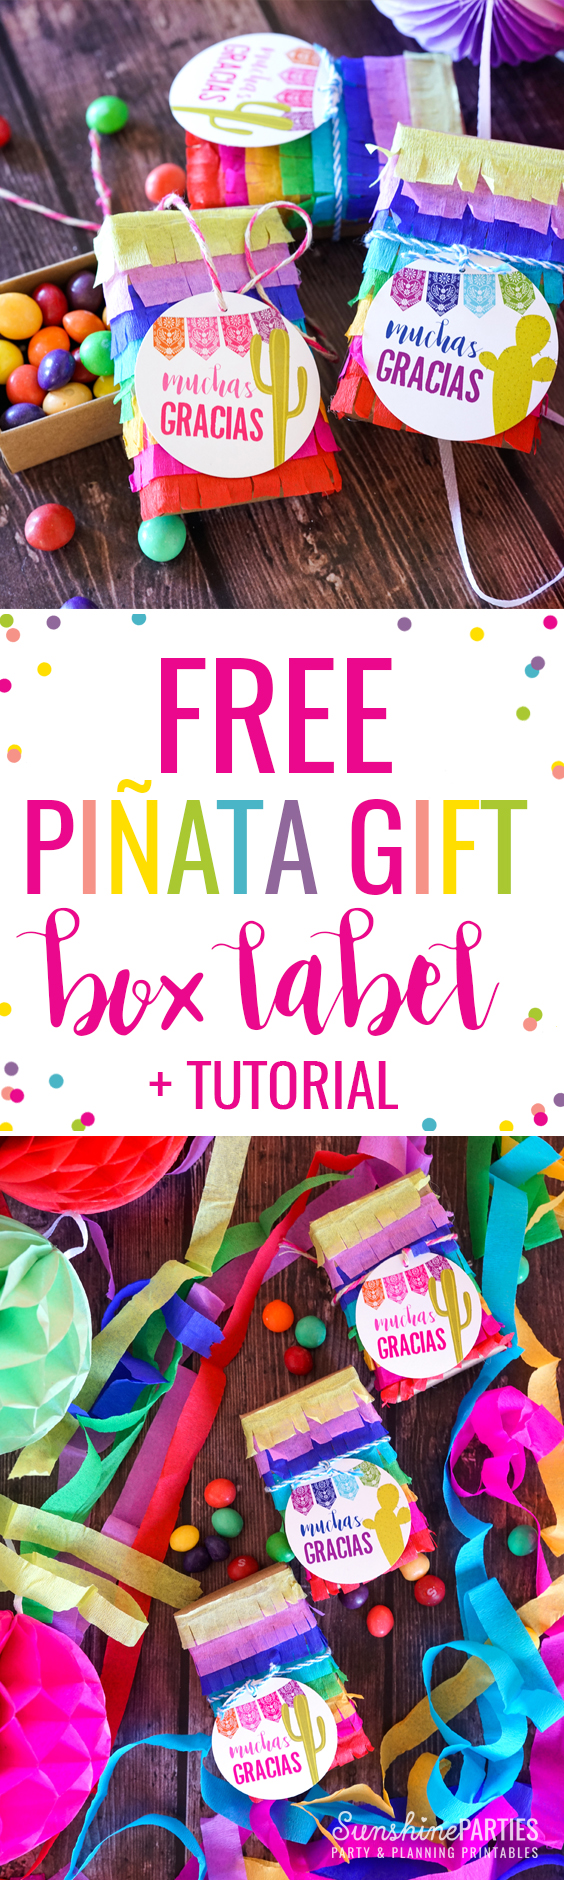 Pinata Gift Box Tutorial and Label